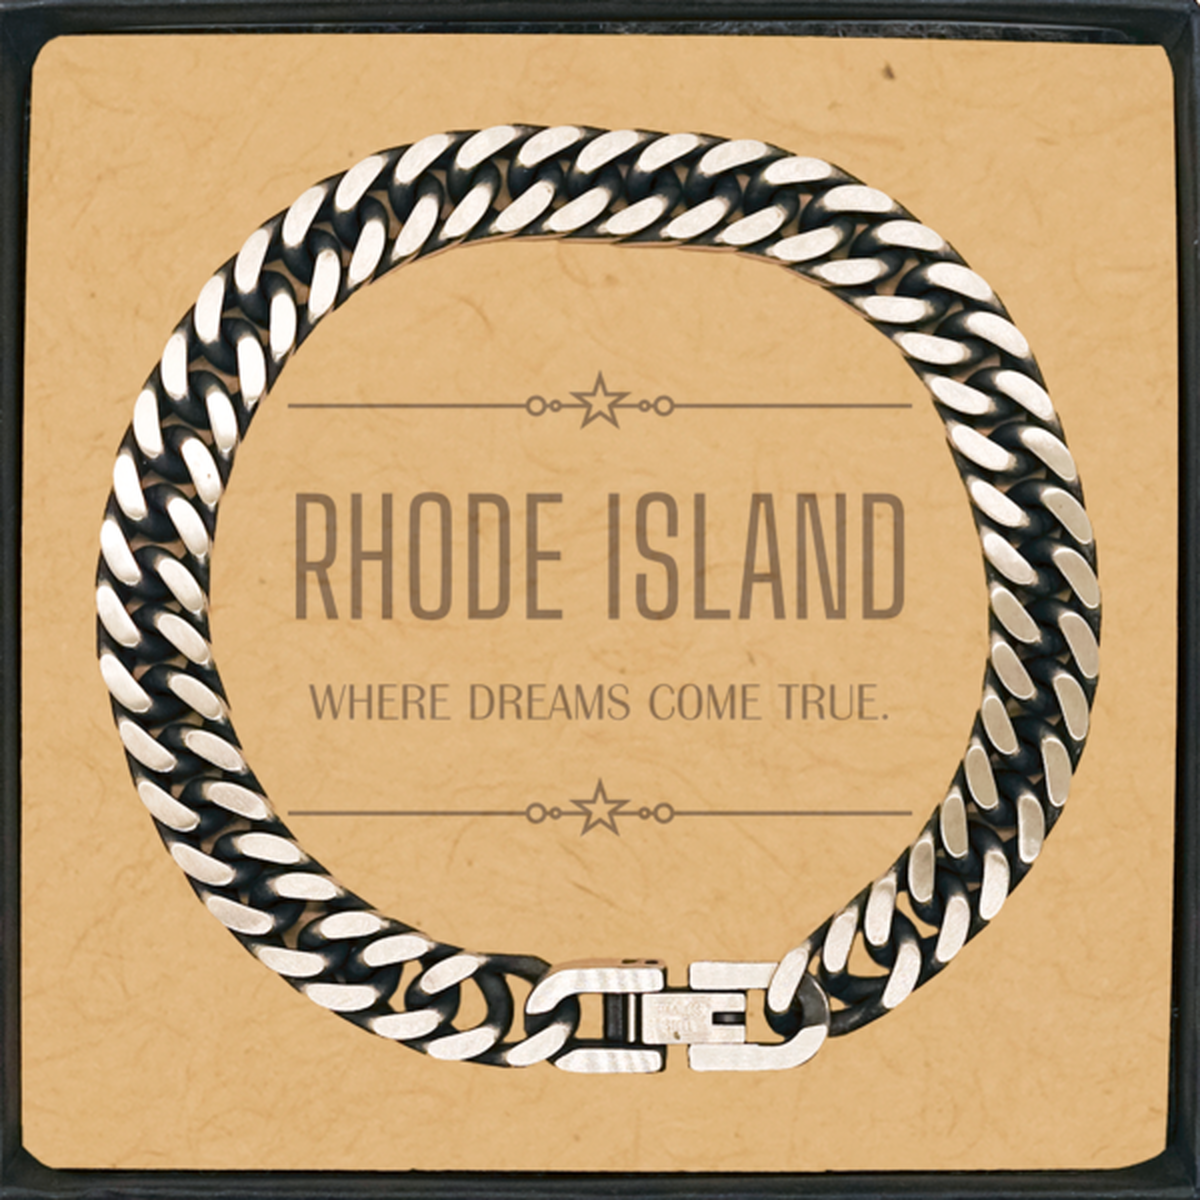 Love Rhode Island State Cuban Link Chain Bracelet, Rhode Island Where dreams come true, Birthday Inspirational Gifts For Rhode Island Men, Women, Friends